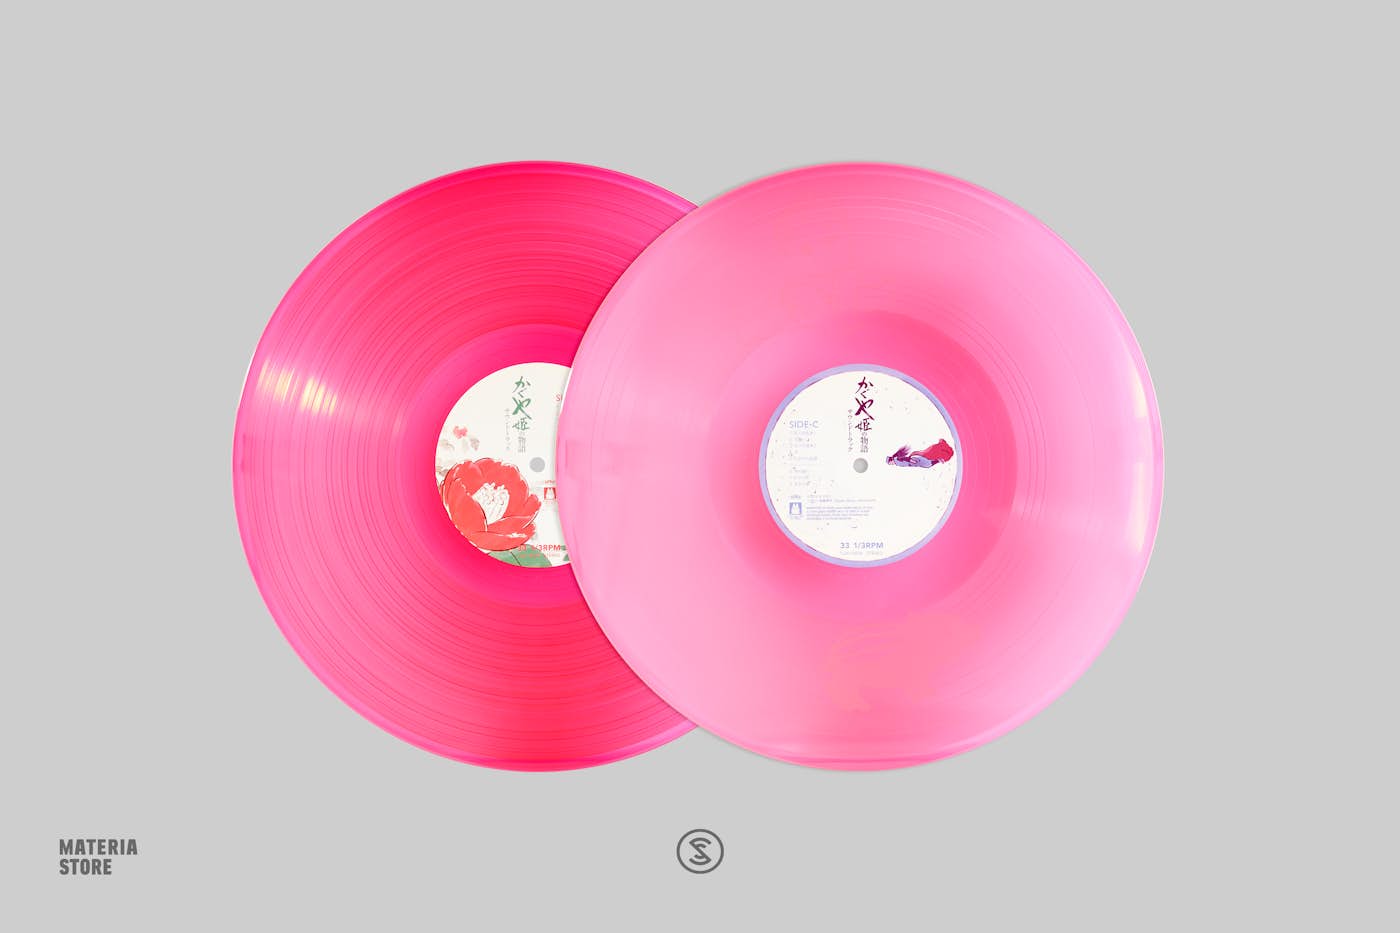 Joe Hisaishi's Princess Mononoke Score Gets First-Ever Vinyl Release